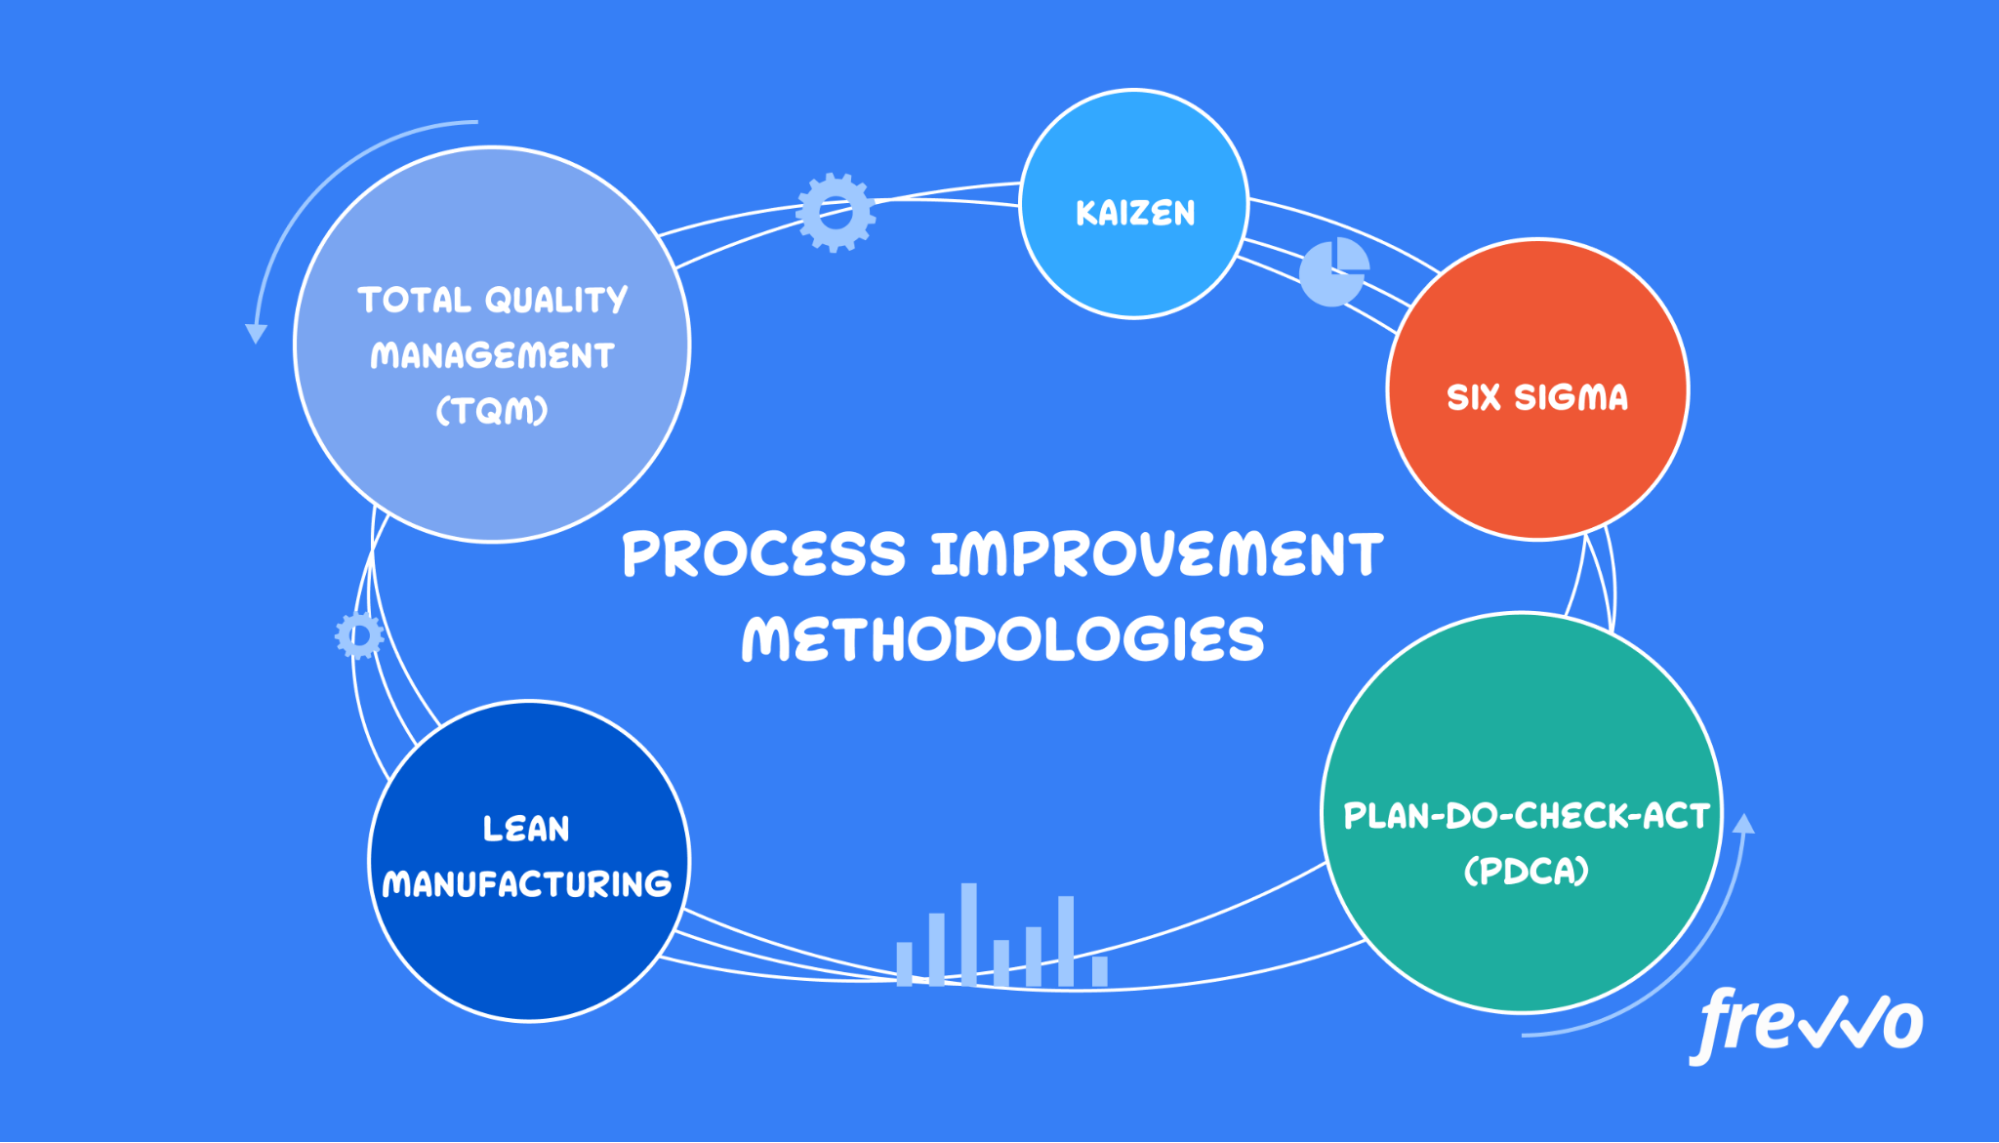 Choosing a process improvement methodology